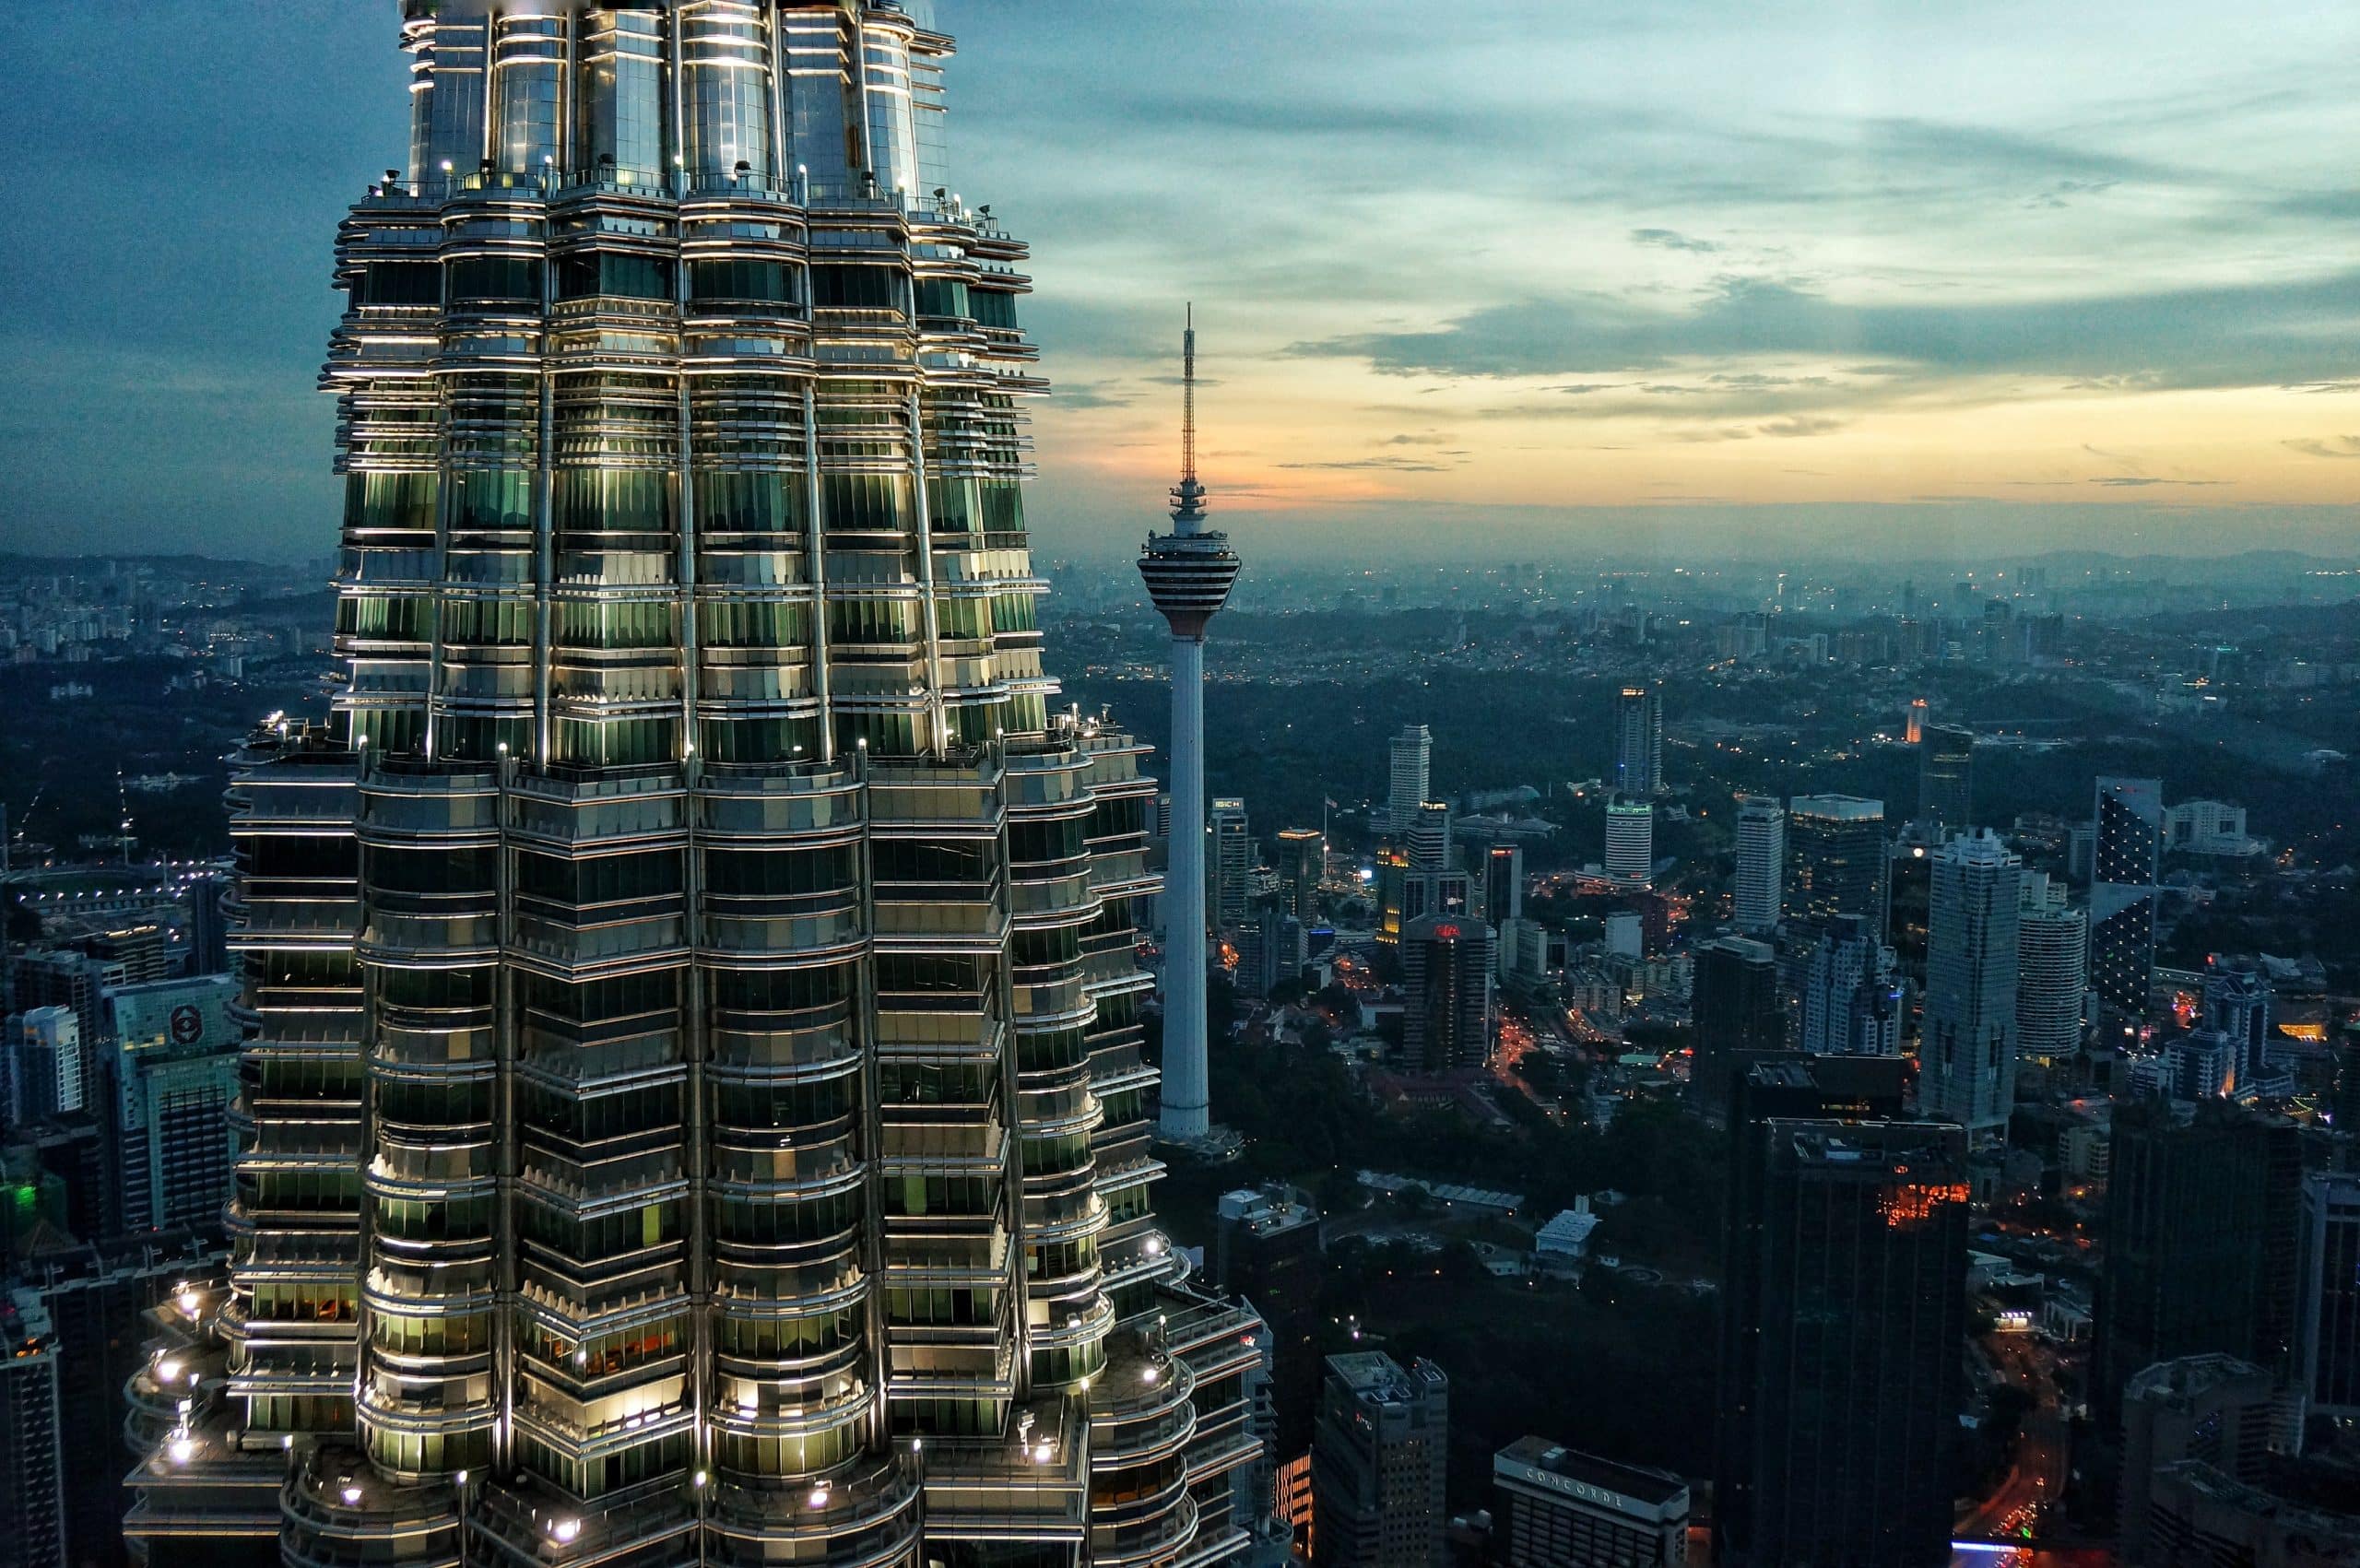 Les tours Petronas à Kuala Lumpur en Malaisie